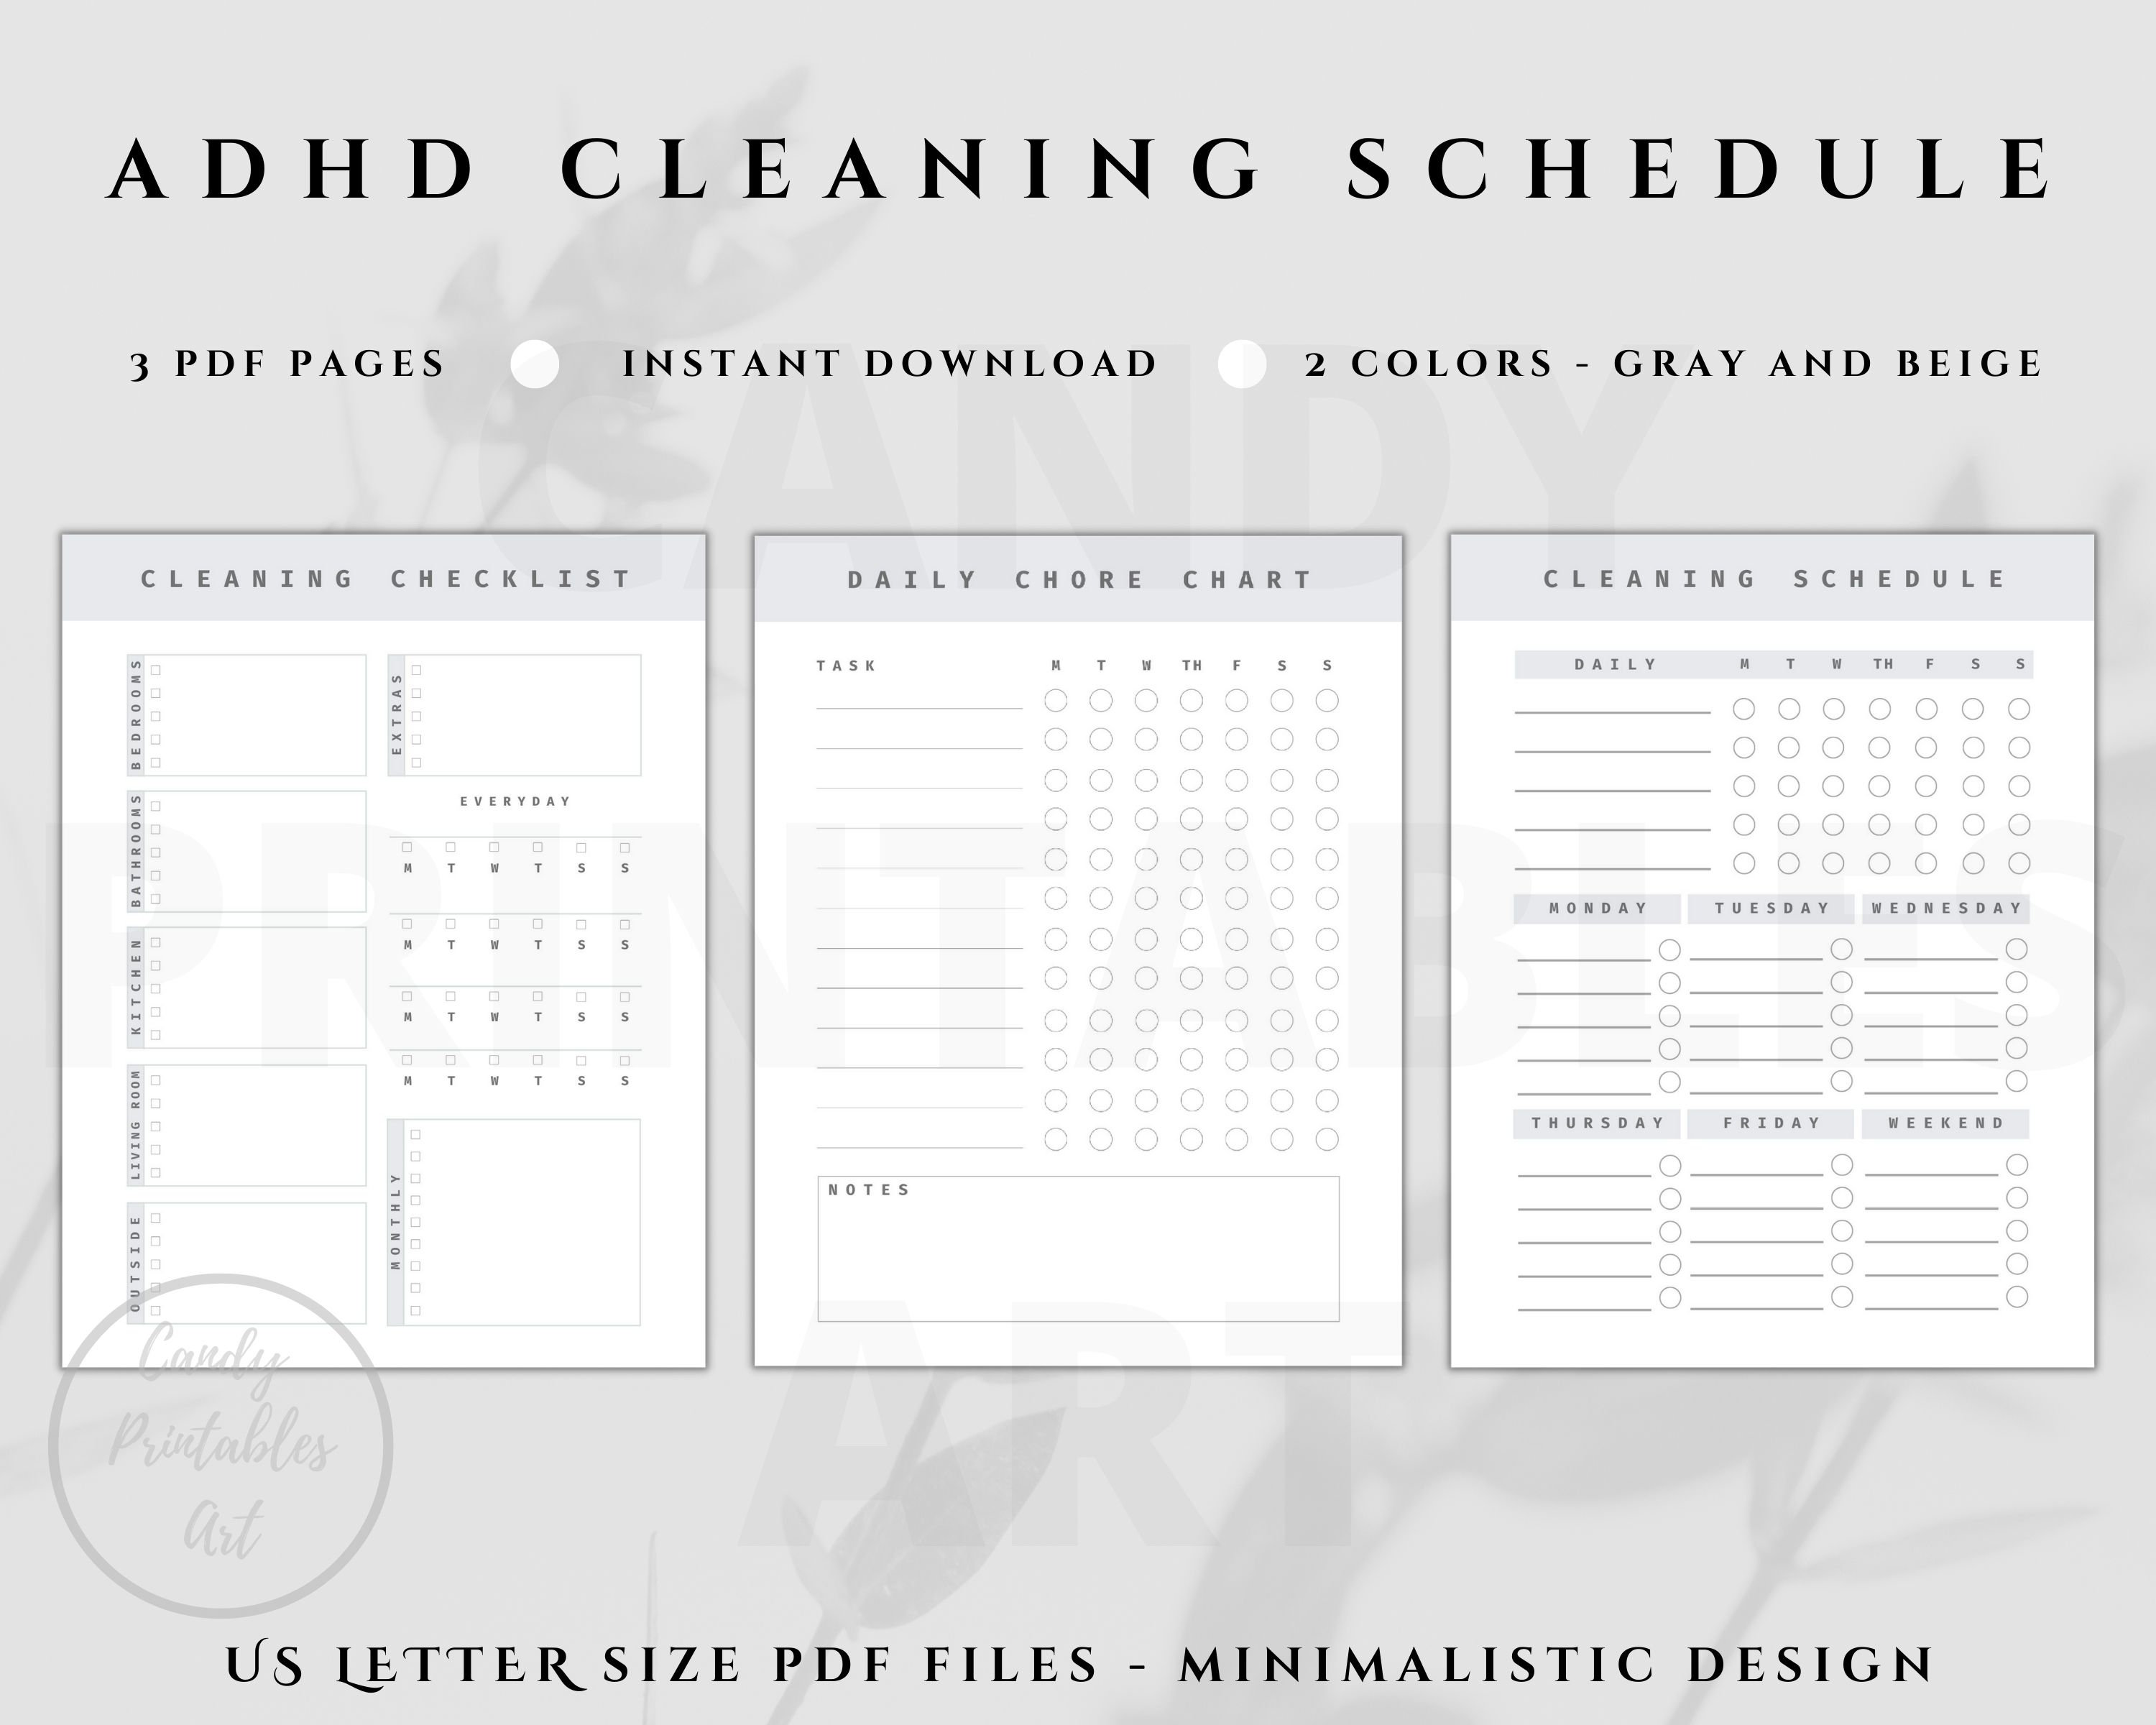 adhd-cleaning-schedule-checklist-adhd-chore-chart-daily-etsy-australia